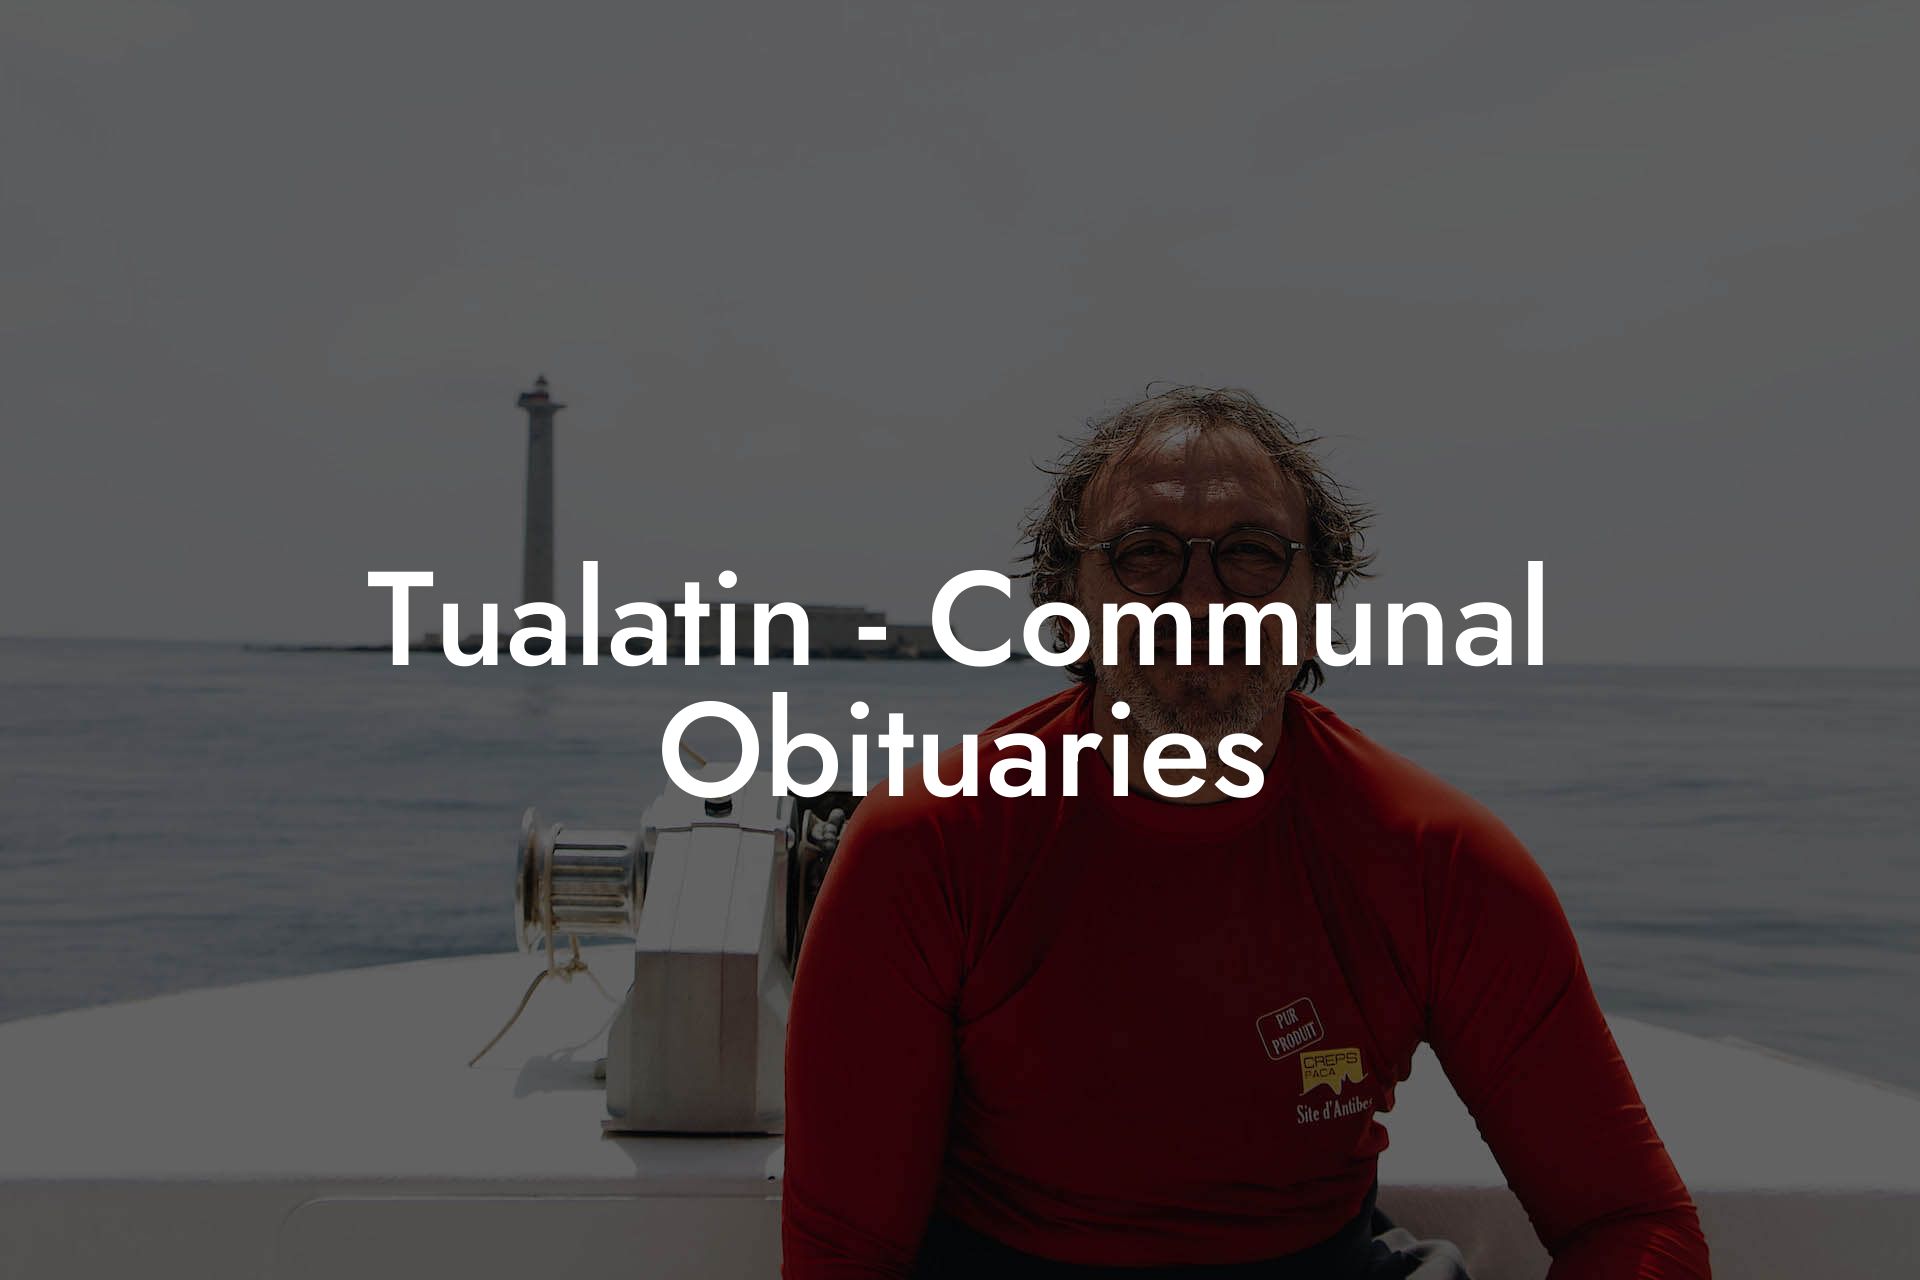 Tualatin - Communal Obituaries